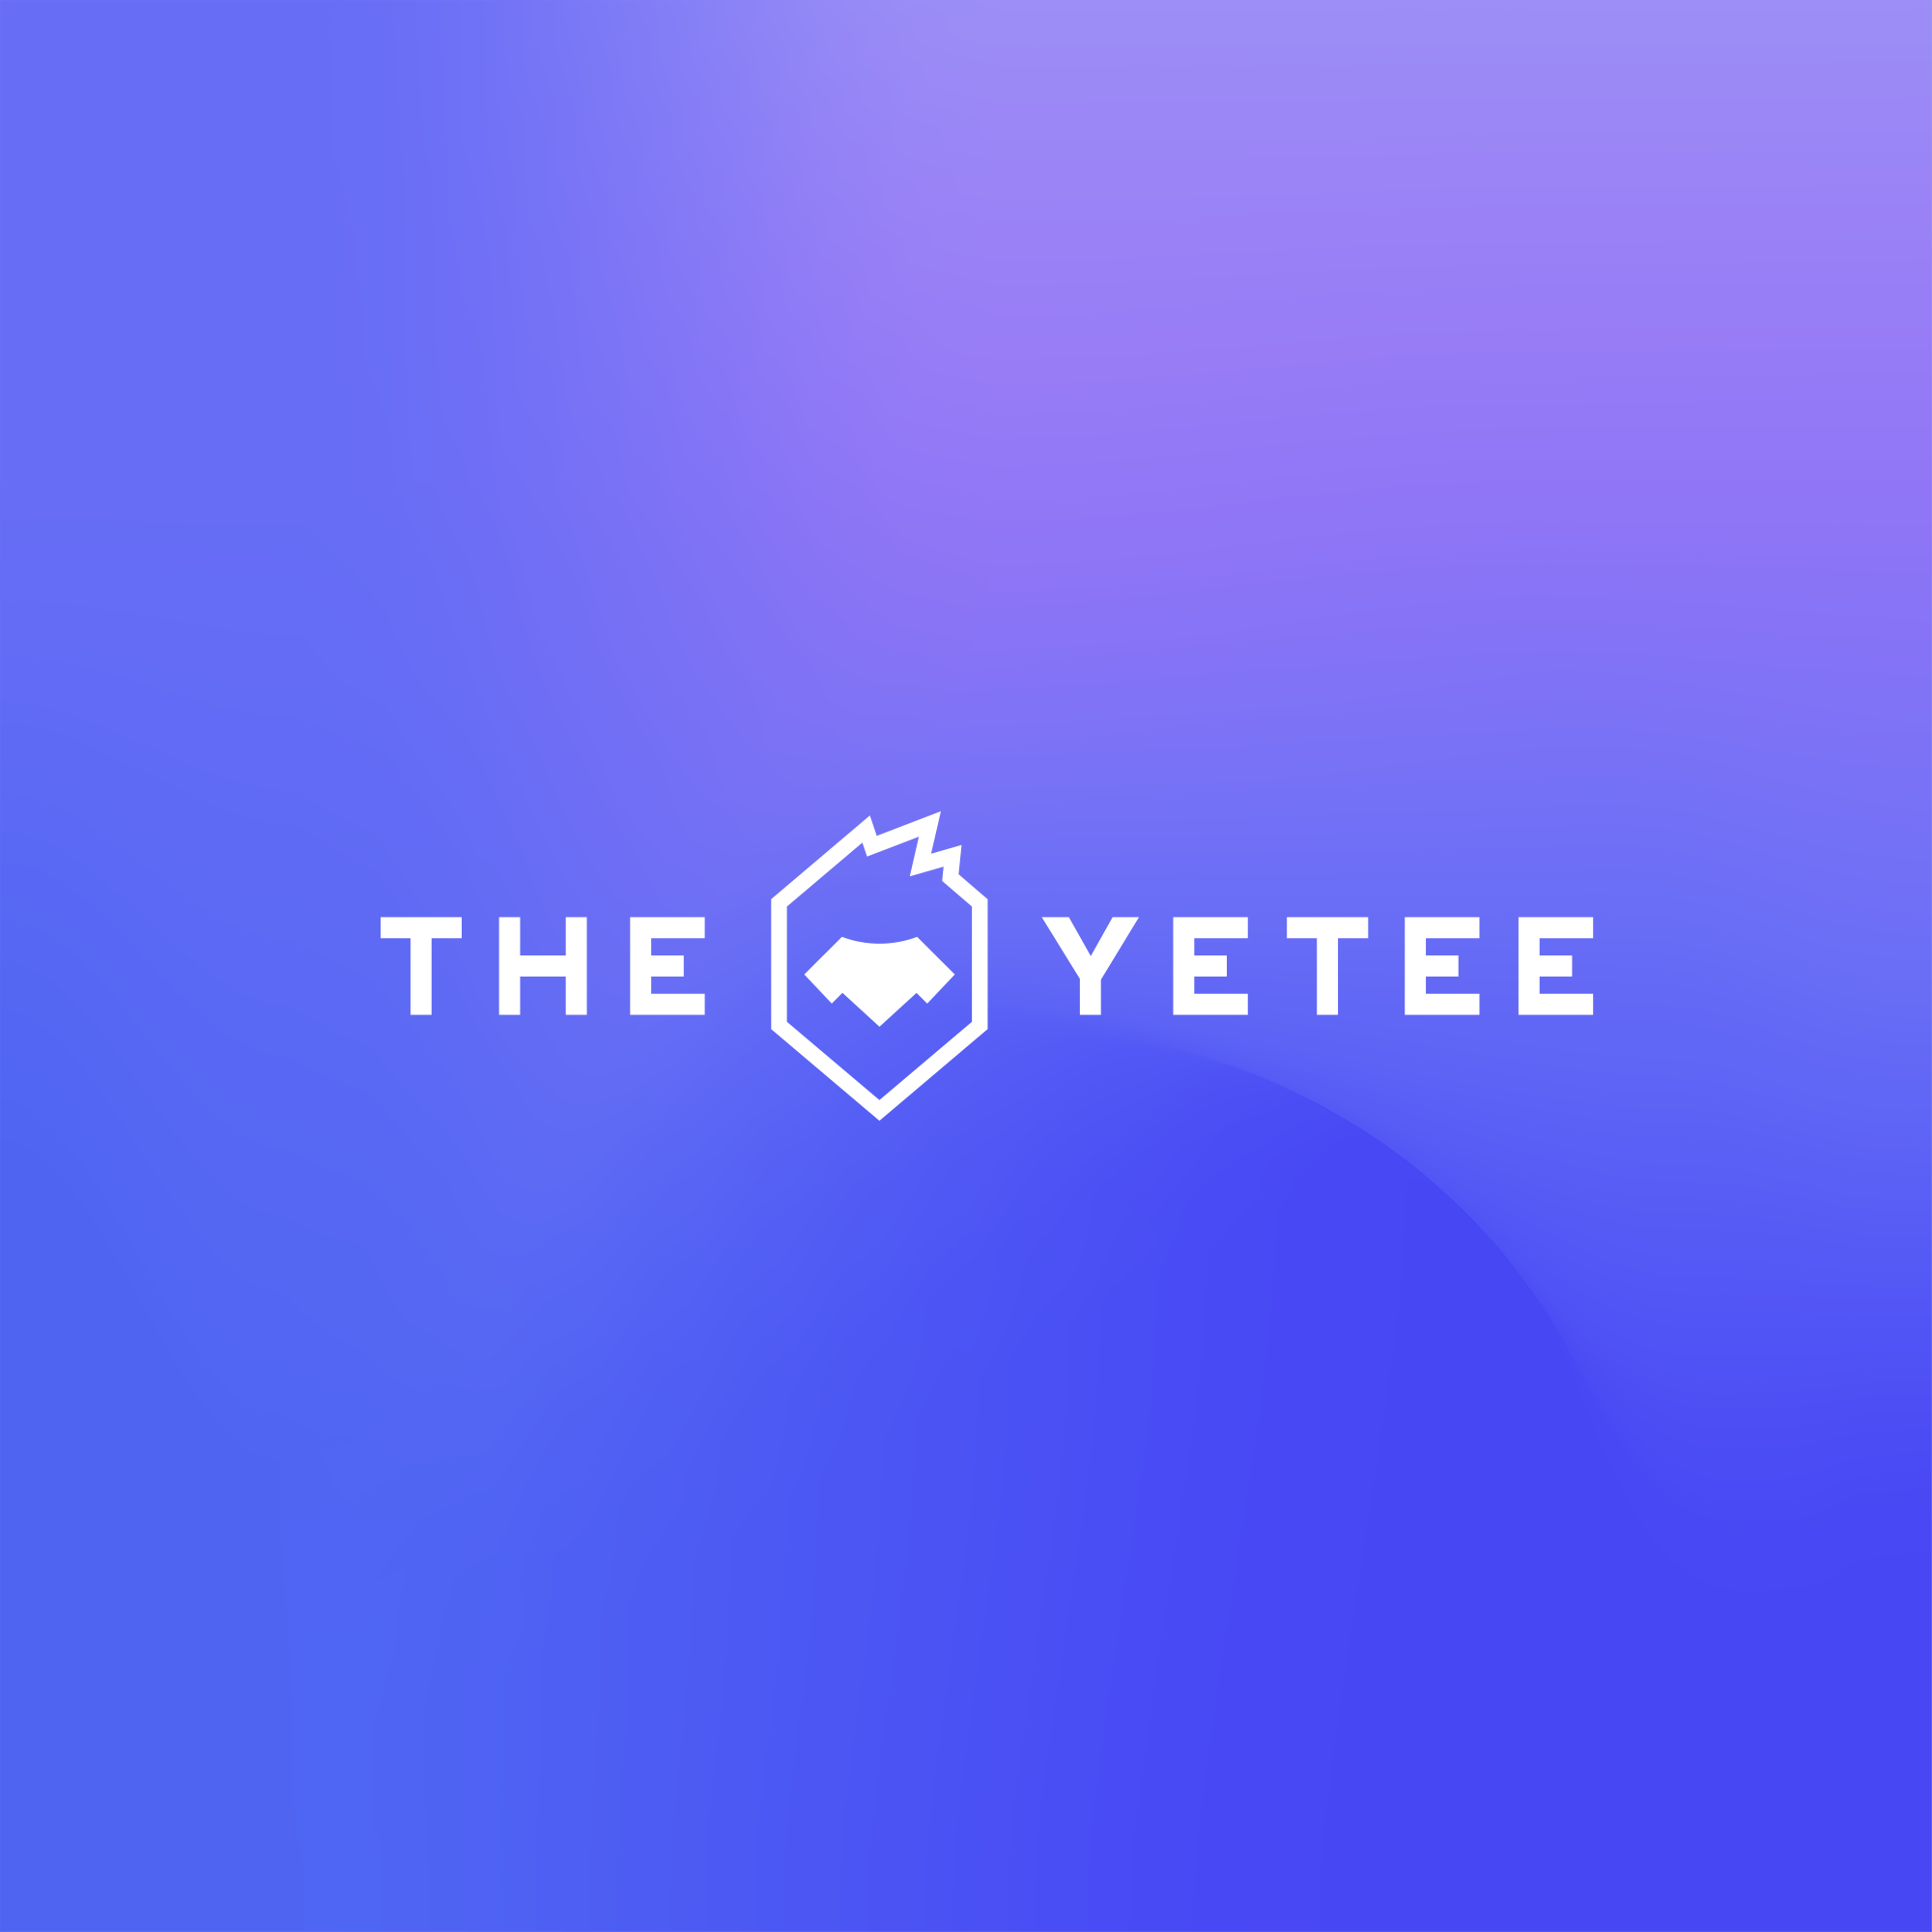 The Yetee logo